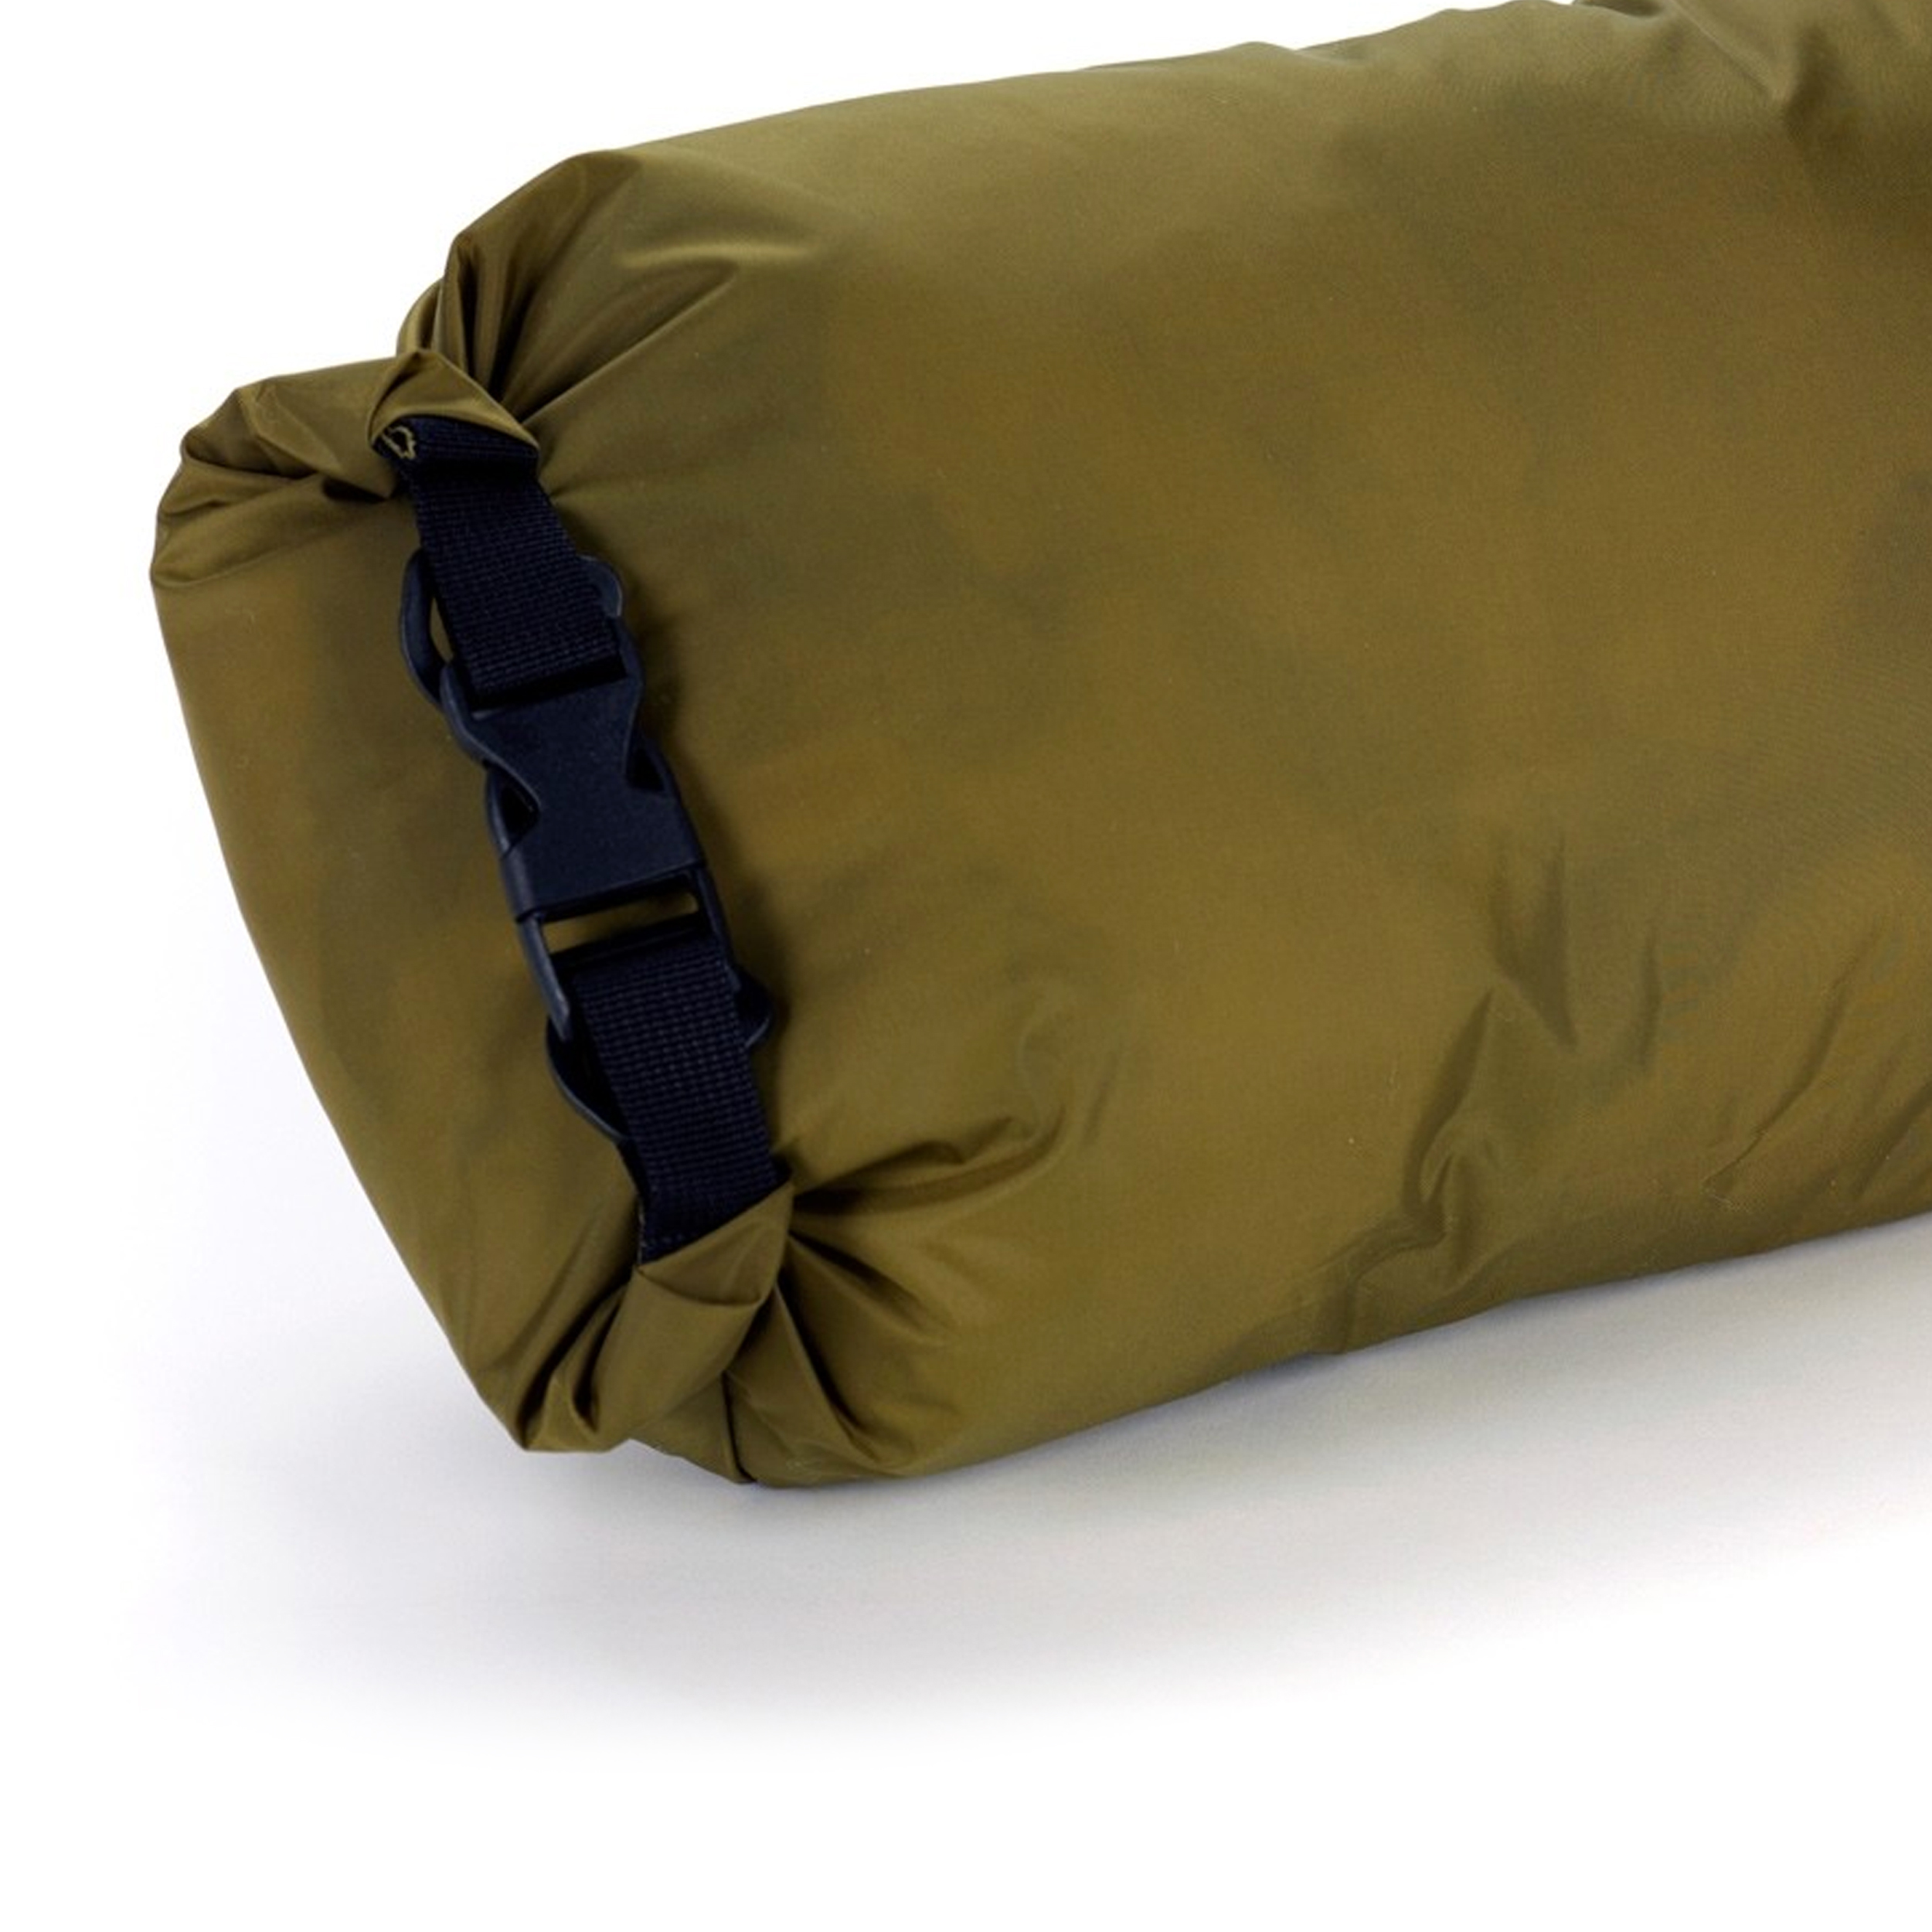 SnugPak Sleeping Bag Compression Sacks - image 3 of 6